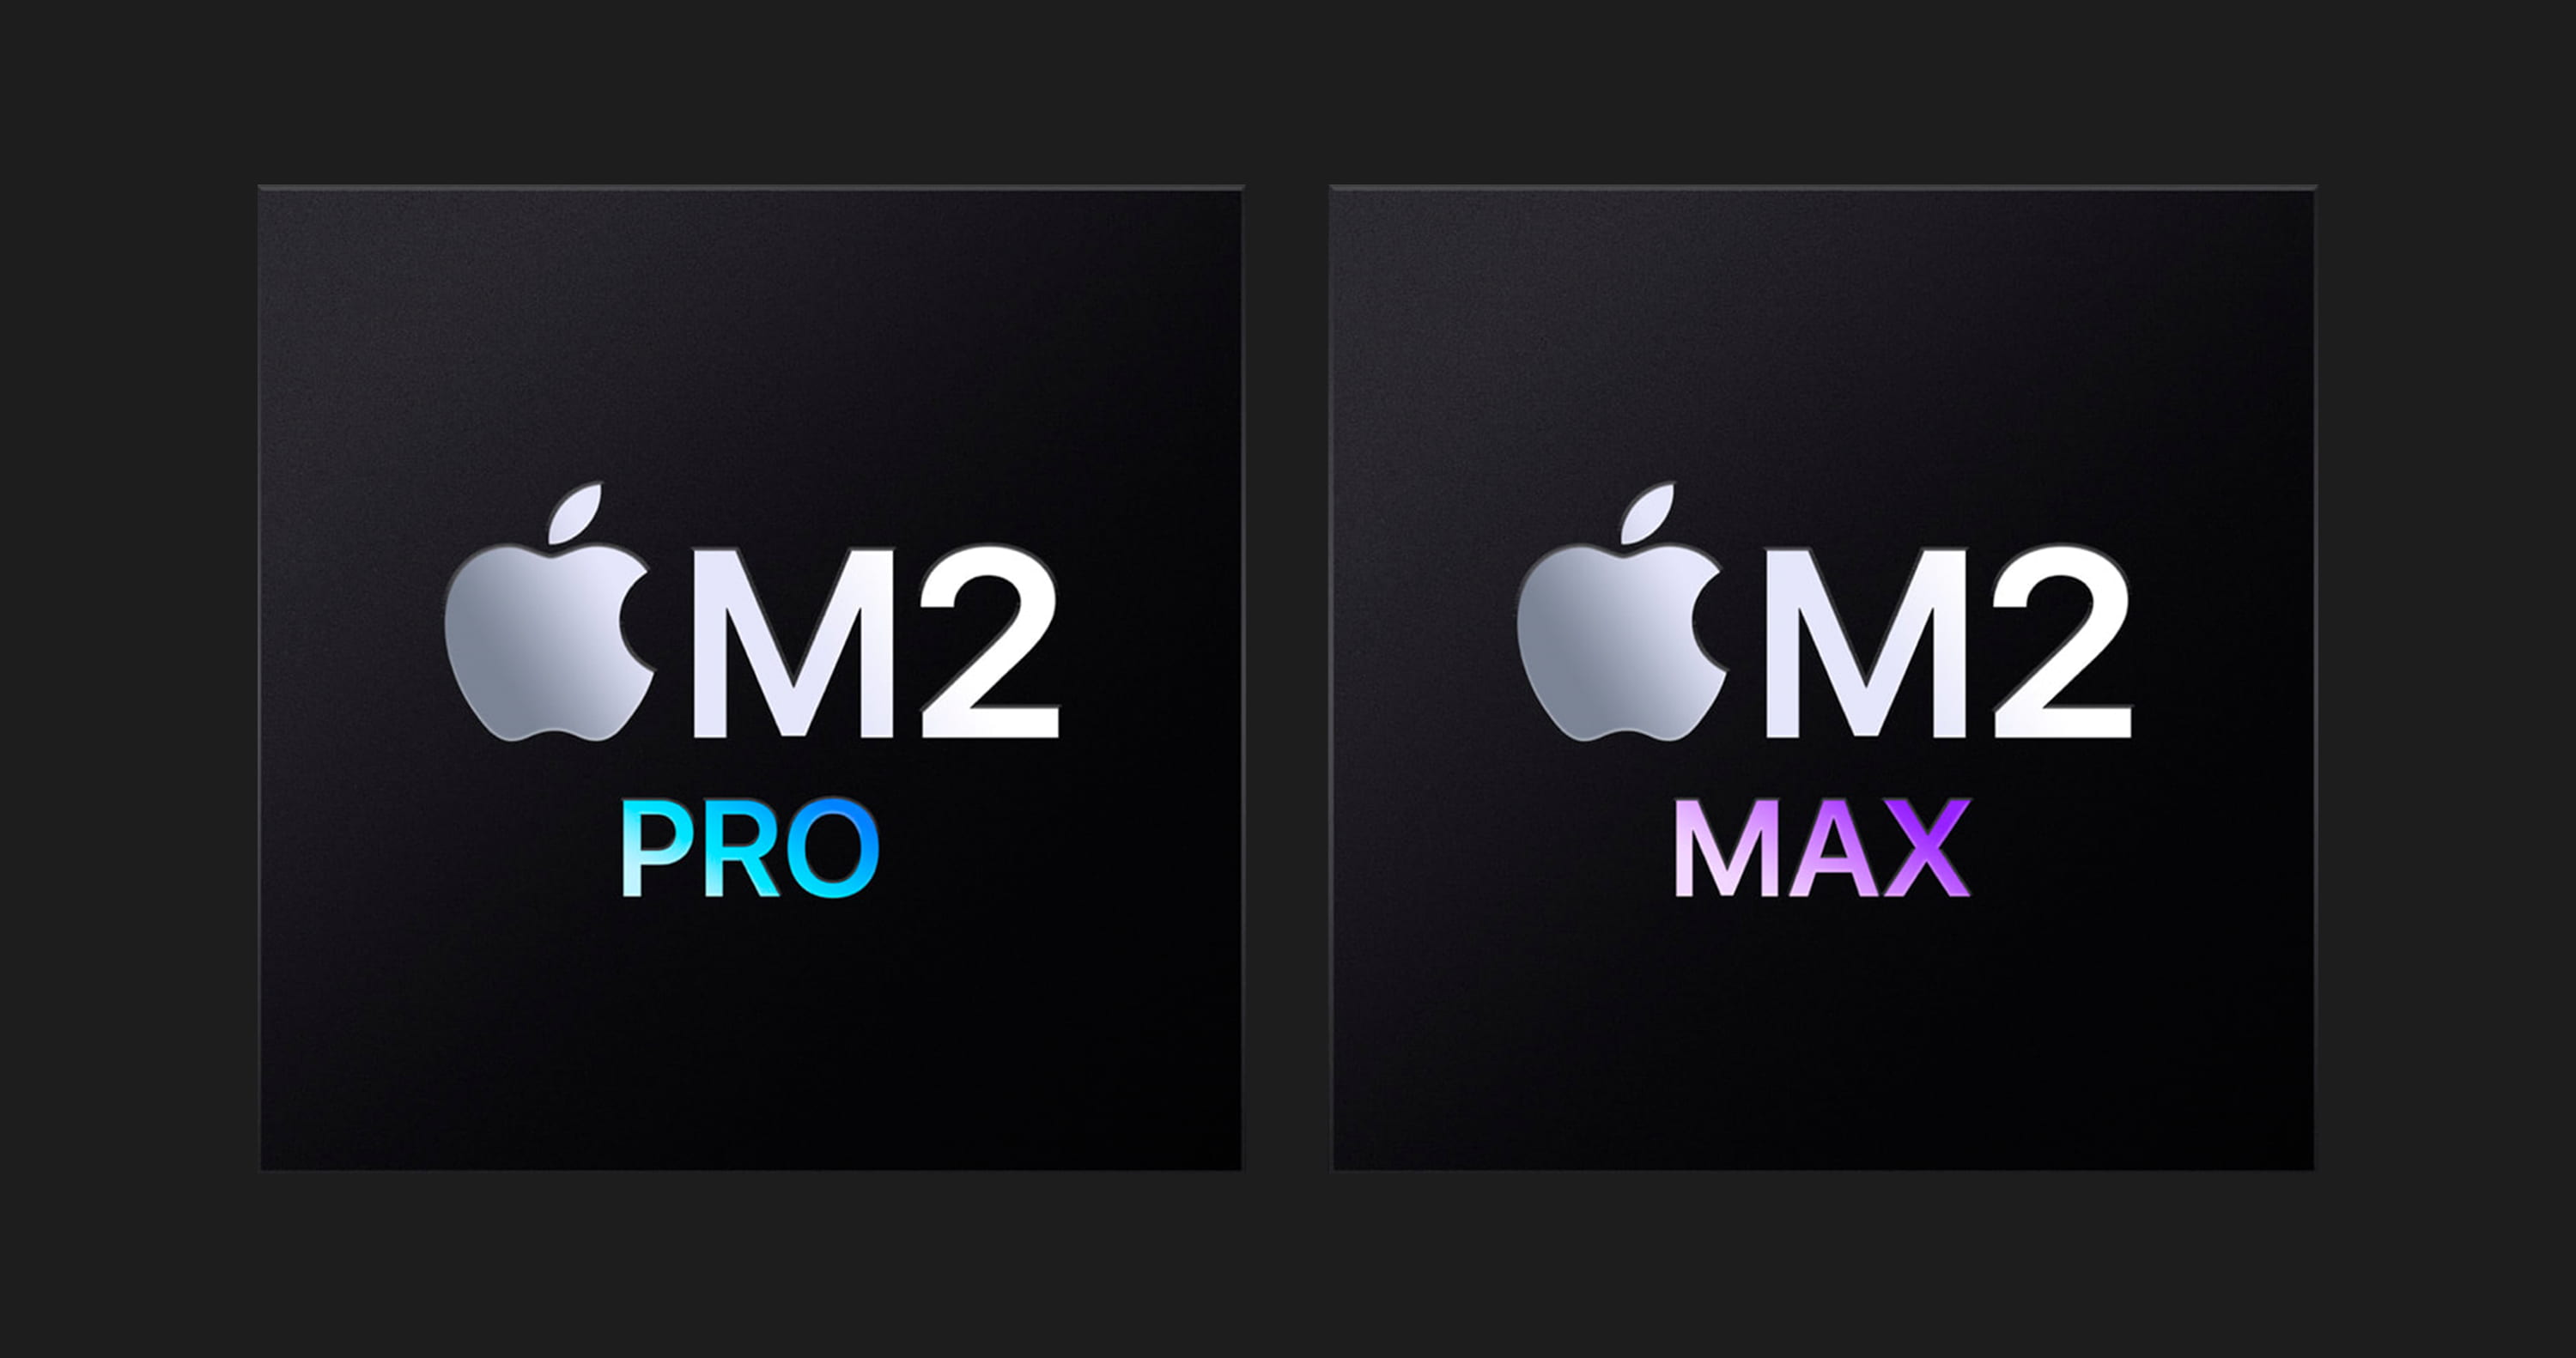 Apple MacBook Pro 16 with Apple M2 Pro, 12 CPU / 19 GPU, 16GB RAM, 512GB SSD (Silver) (MNWC3)